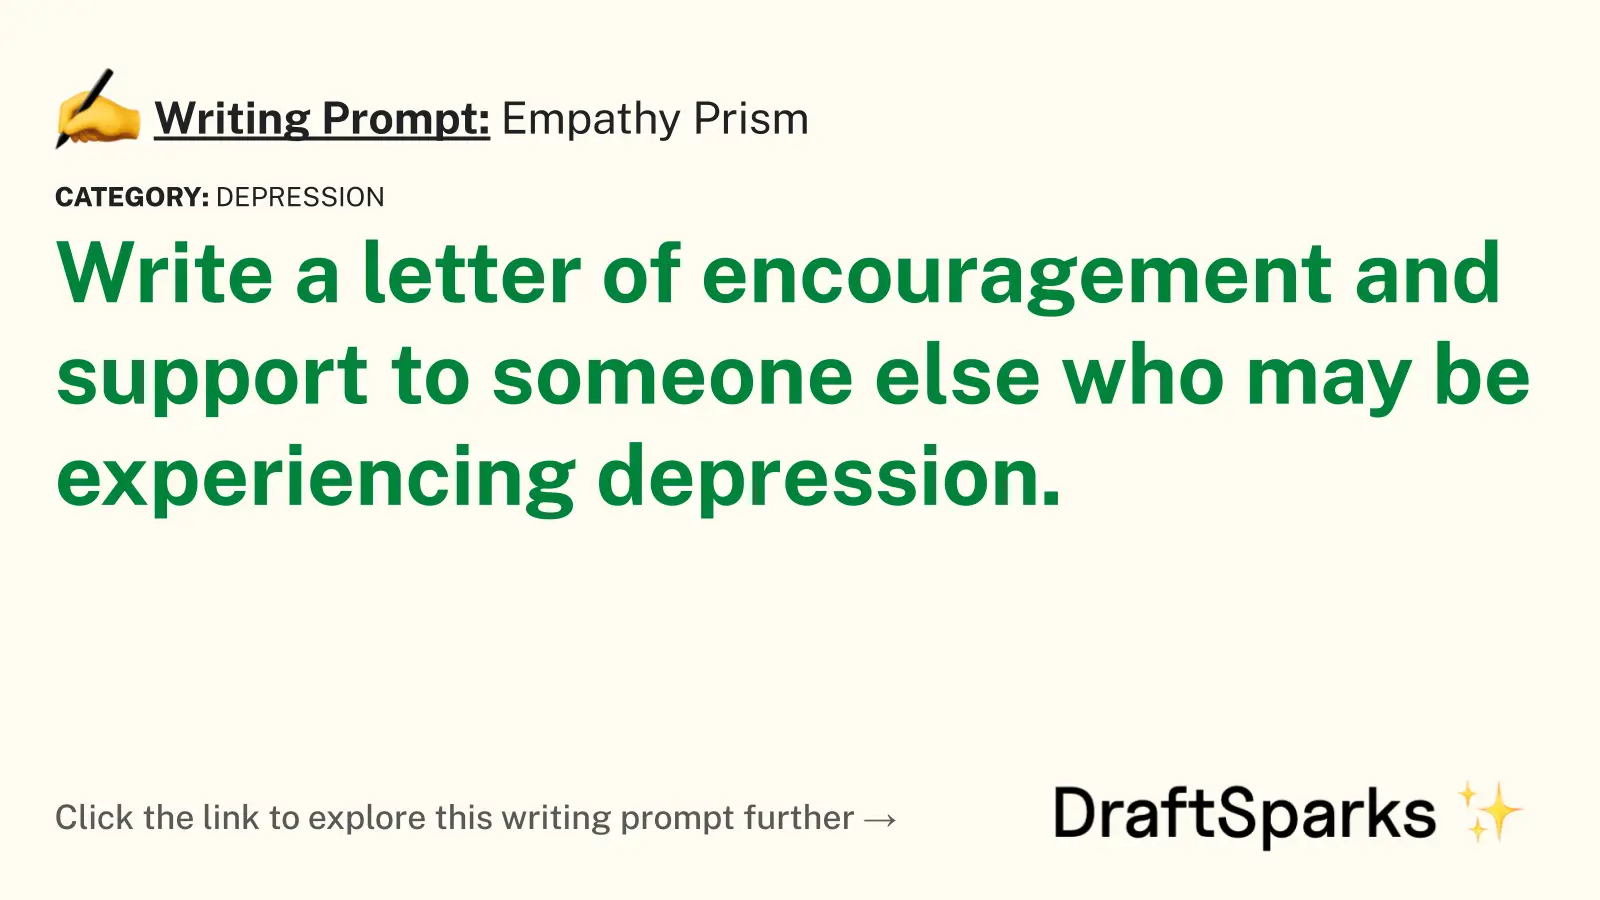 Empathy Prism